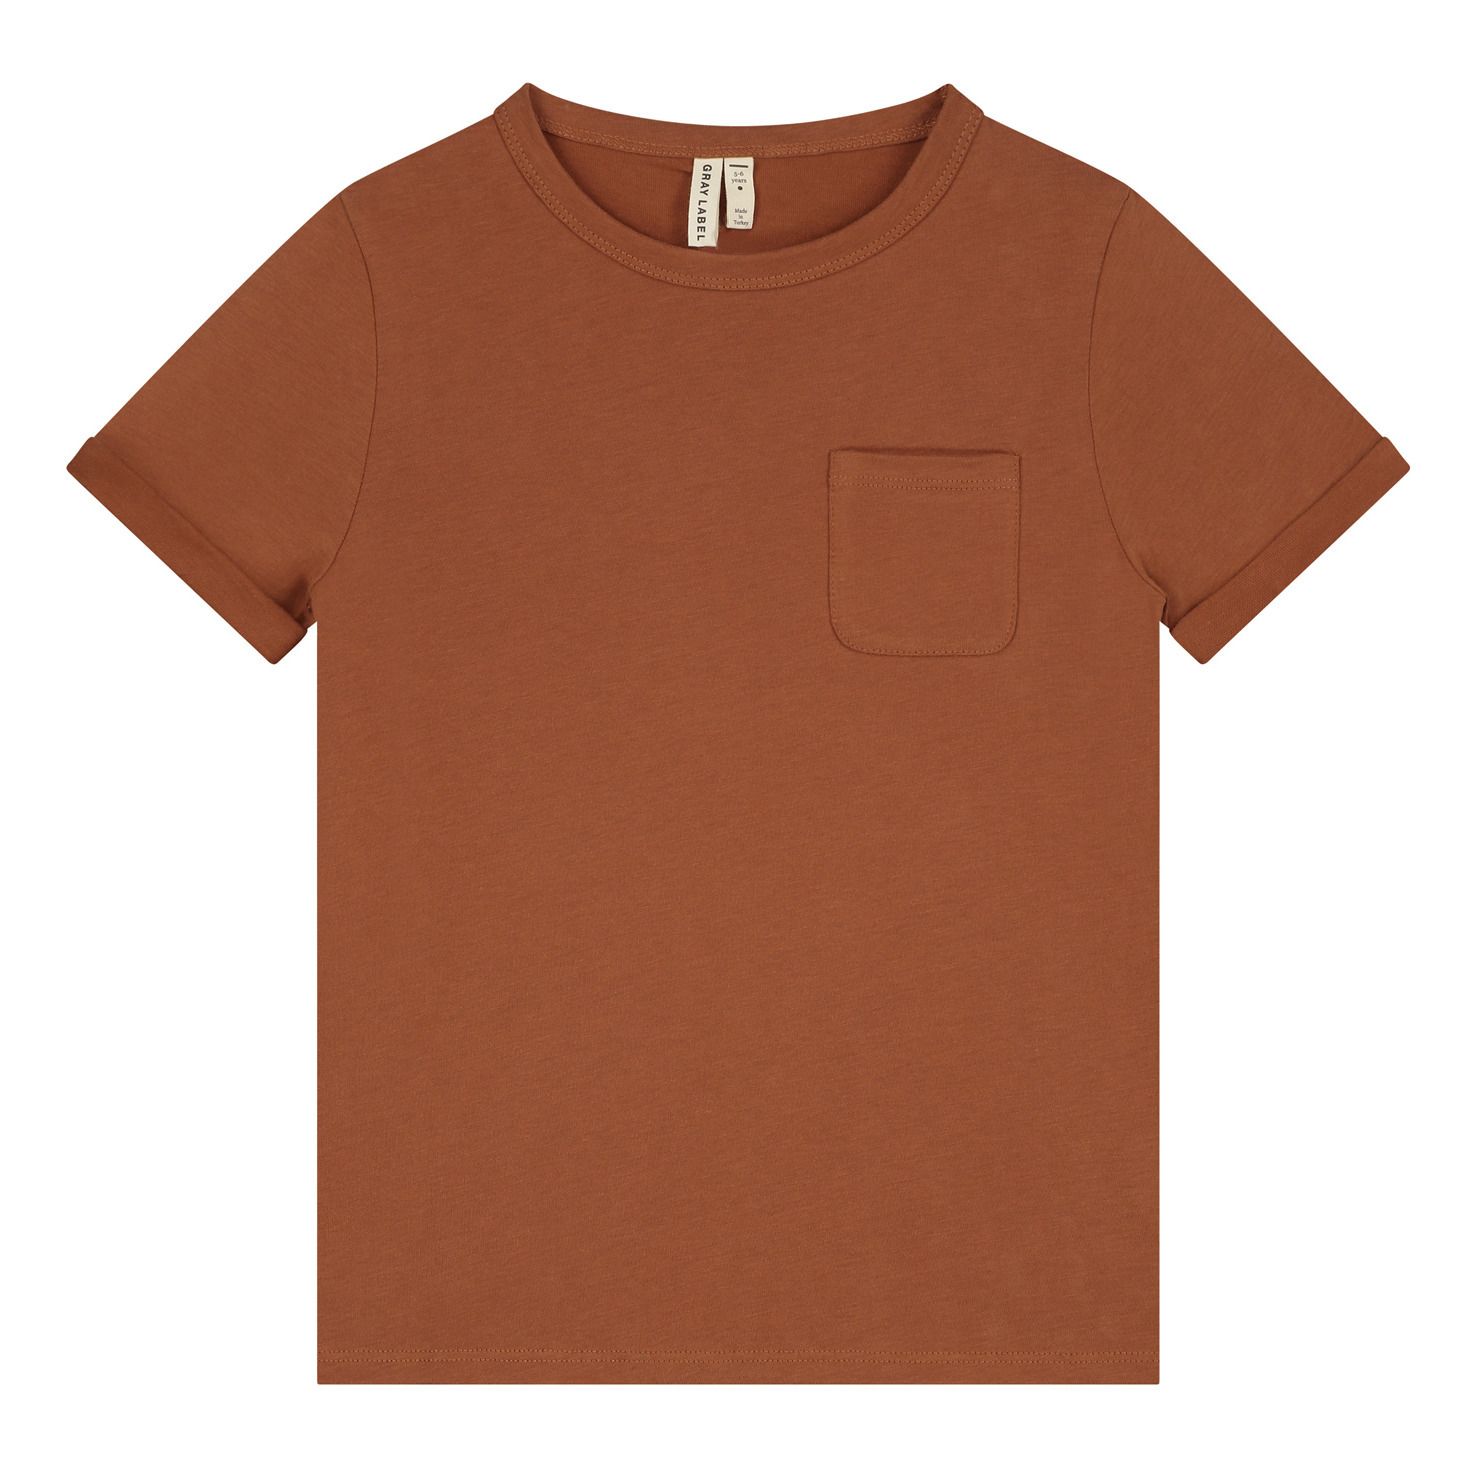 Gray Label - T-Shirt Coton Bio - Collection Adulte - - Femme - Ocre